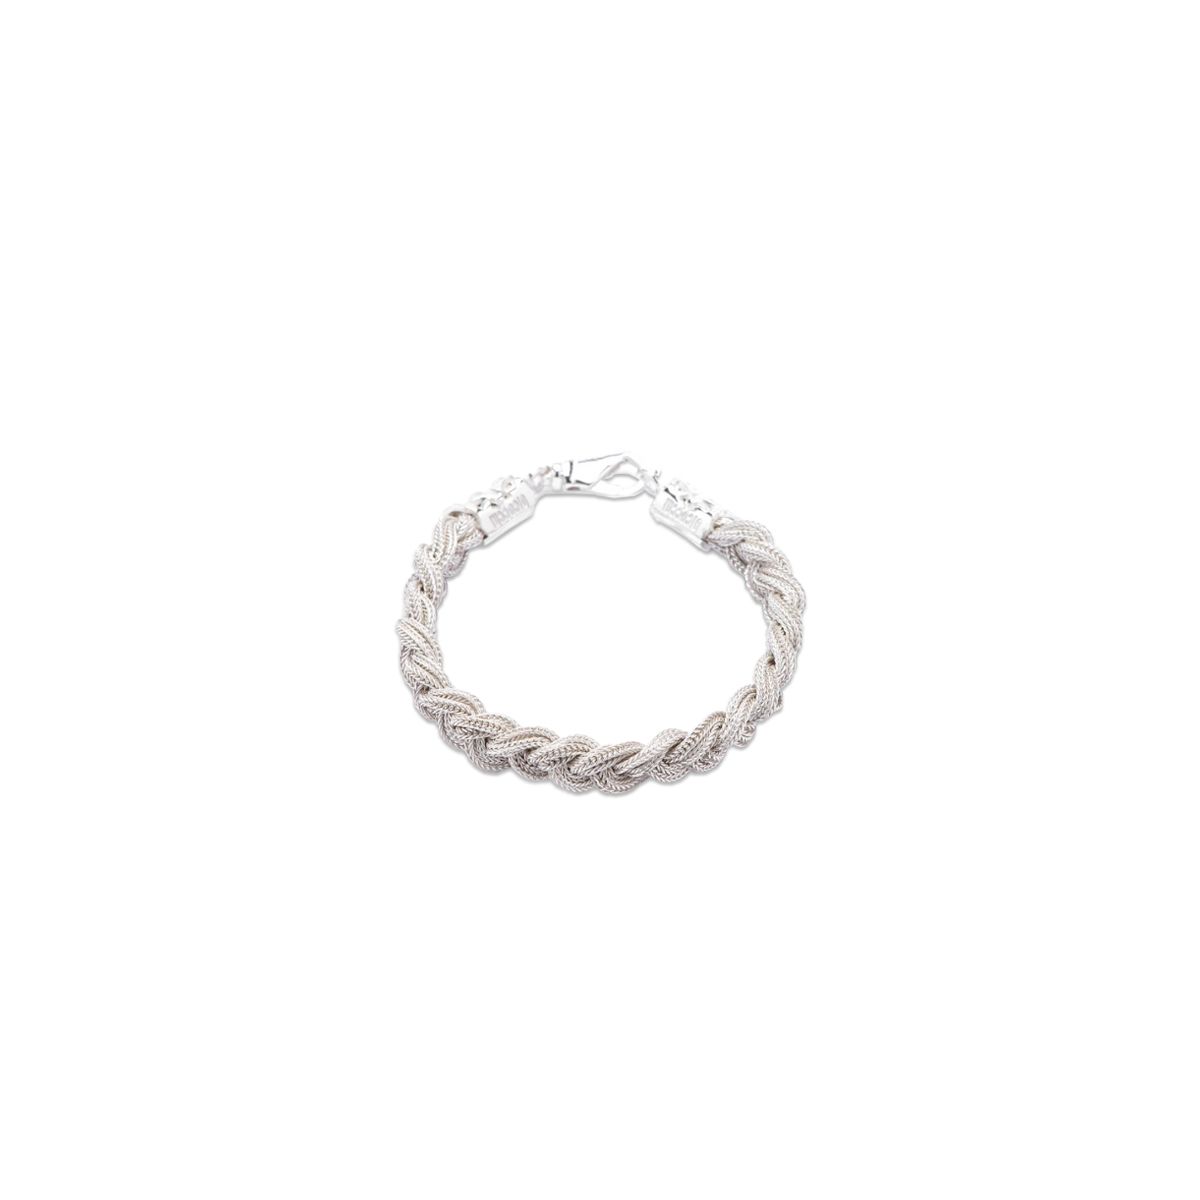 Silver Braided Bracelet